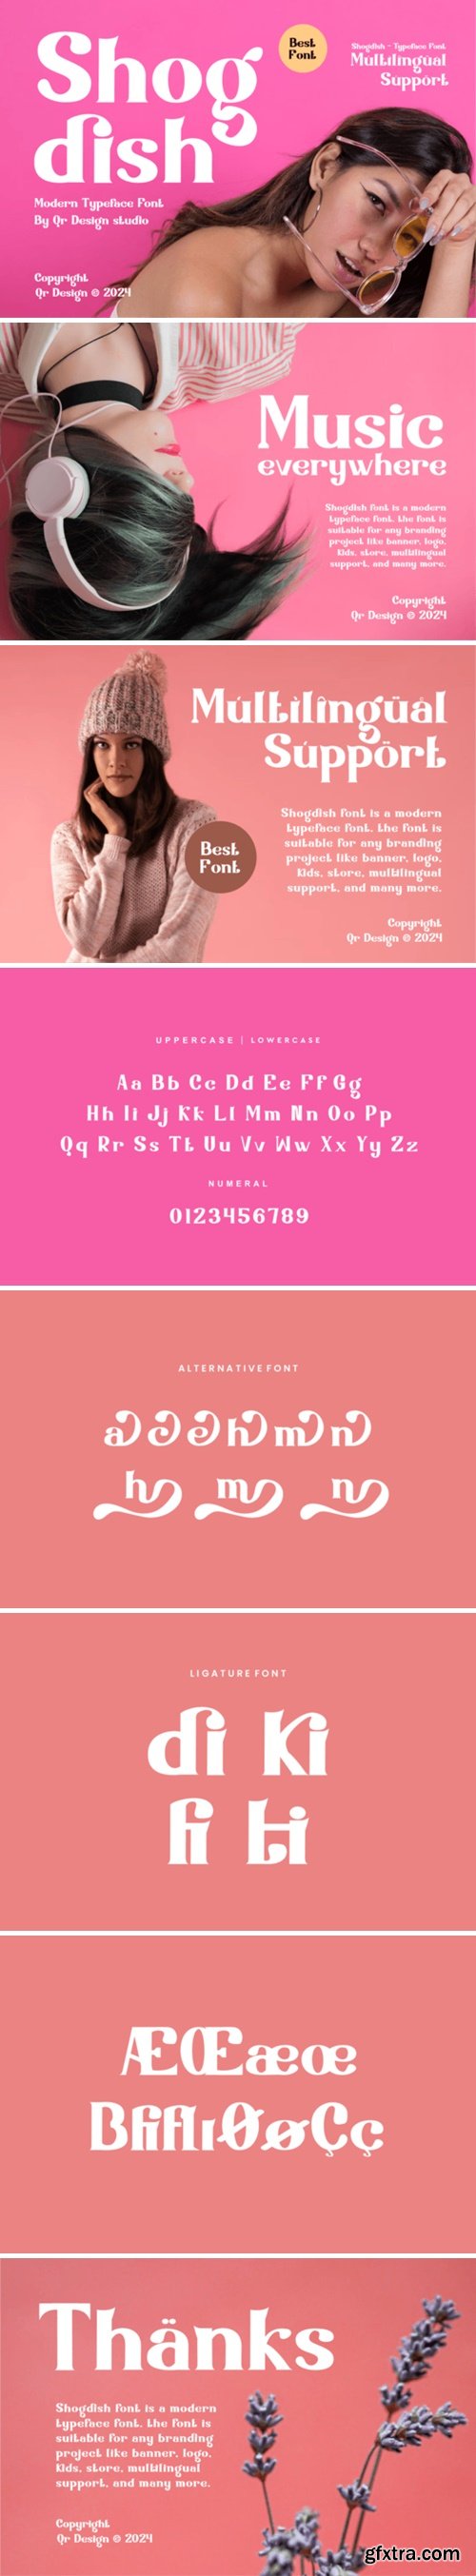 CM - Shogdish - Serif Typeface Font 92470813